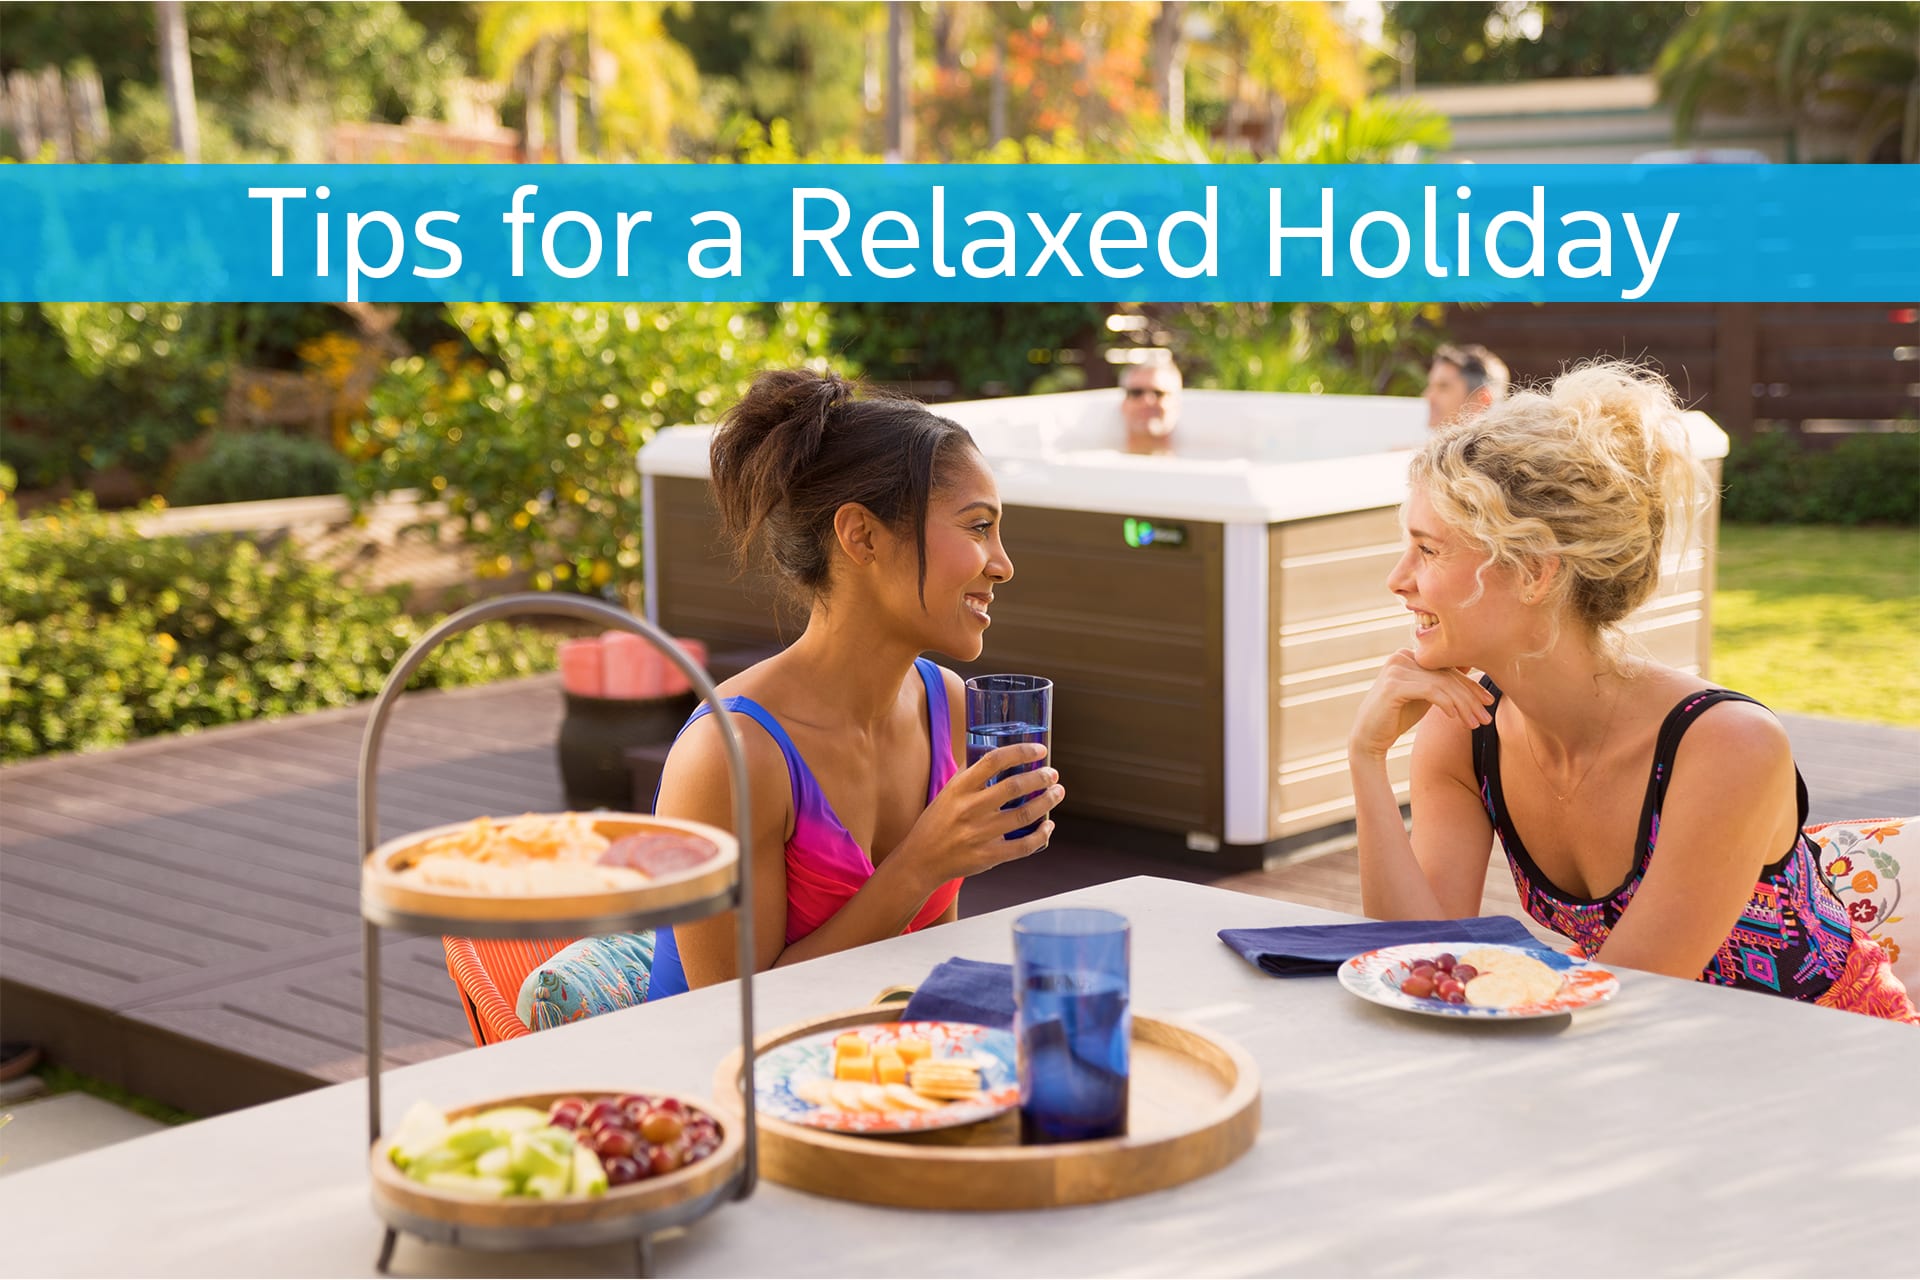 Hot Tubs, Swim Spas Fallon Dealer Shares Portable Spa Tips for a Relaxed Holiday